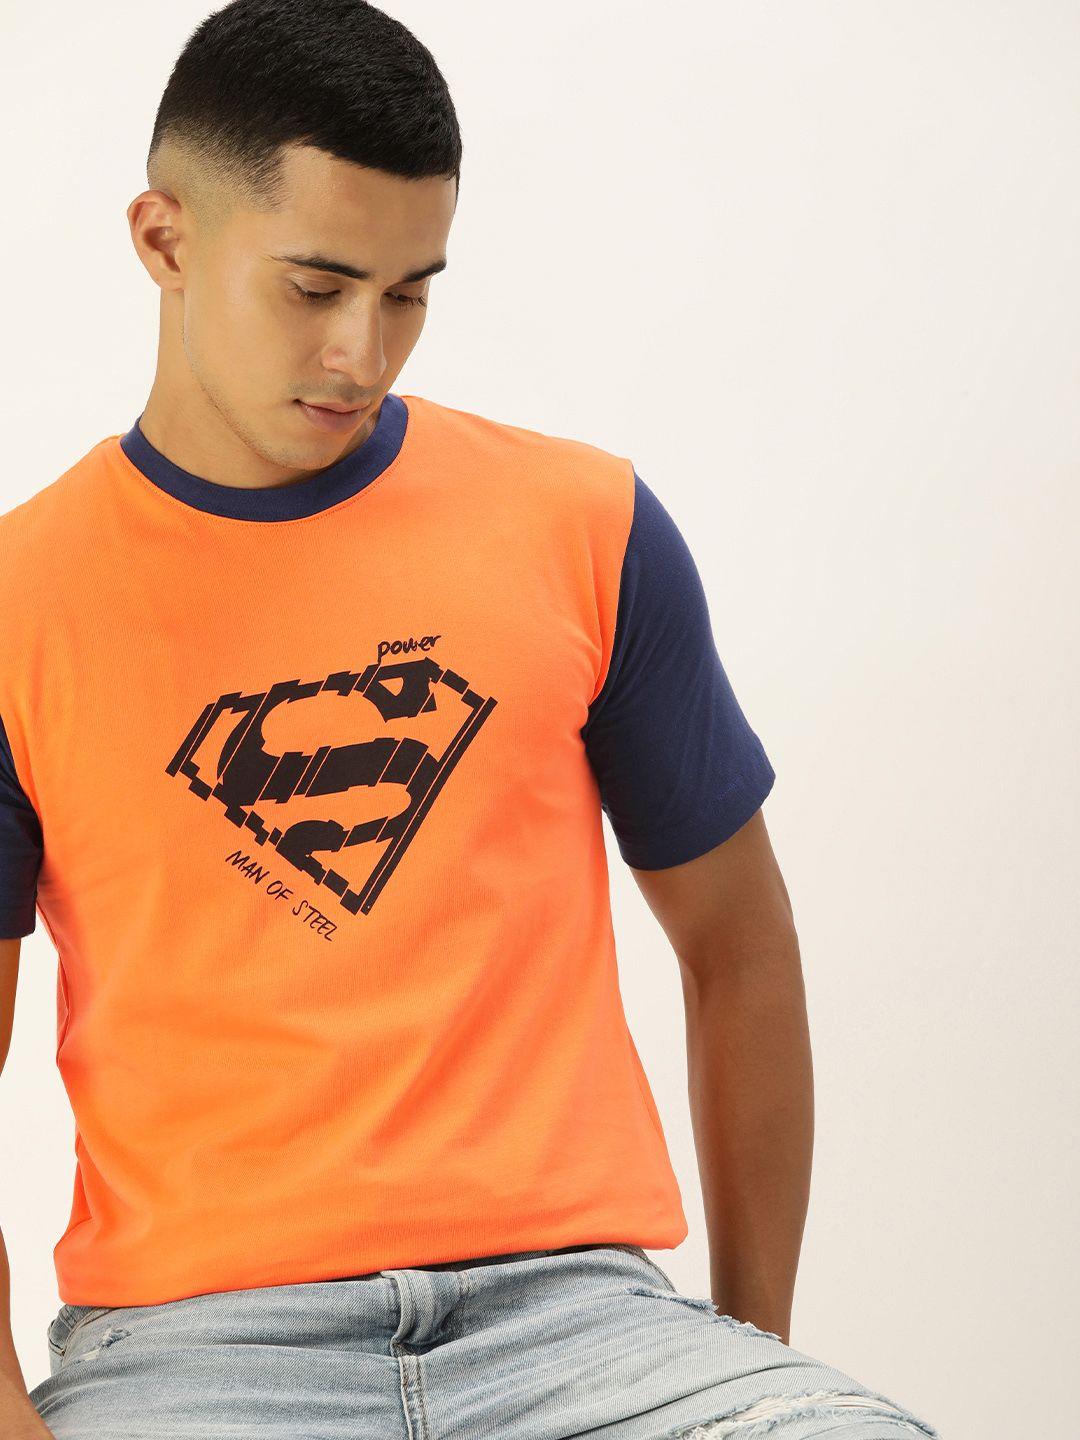 kook n keech men superman printed pure cotton t-shirt